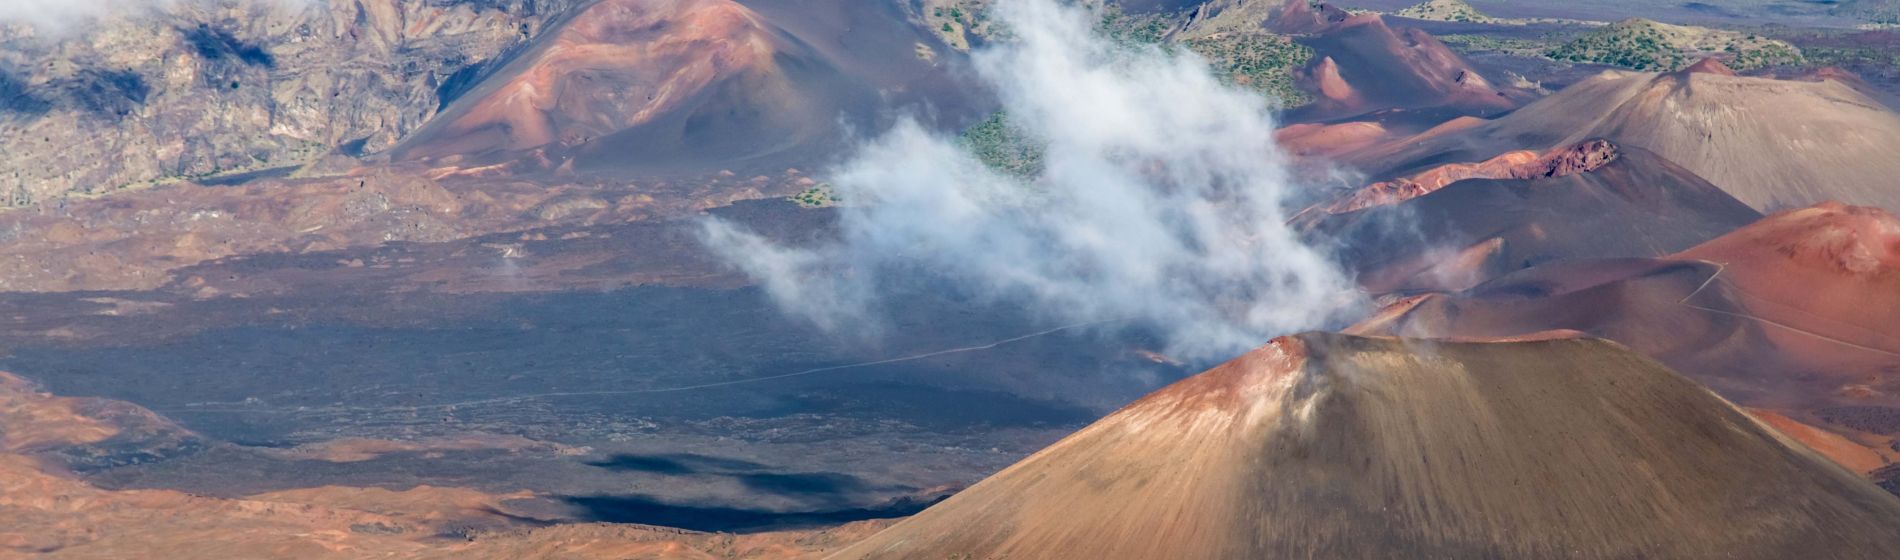 haleakala-vulkankrater_maui_hawaii.jpg